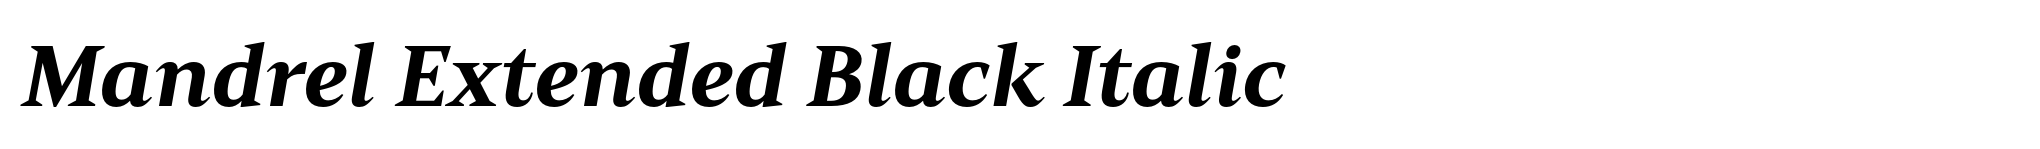 Mandrel Extended Black Italic image